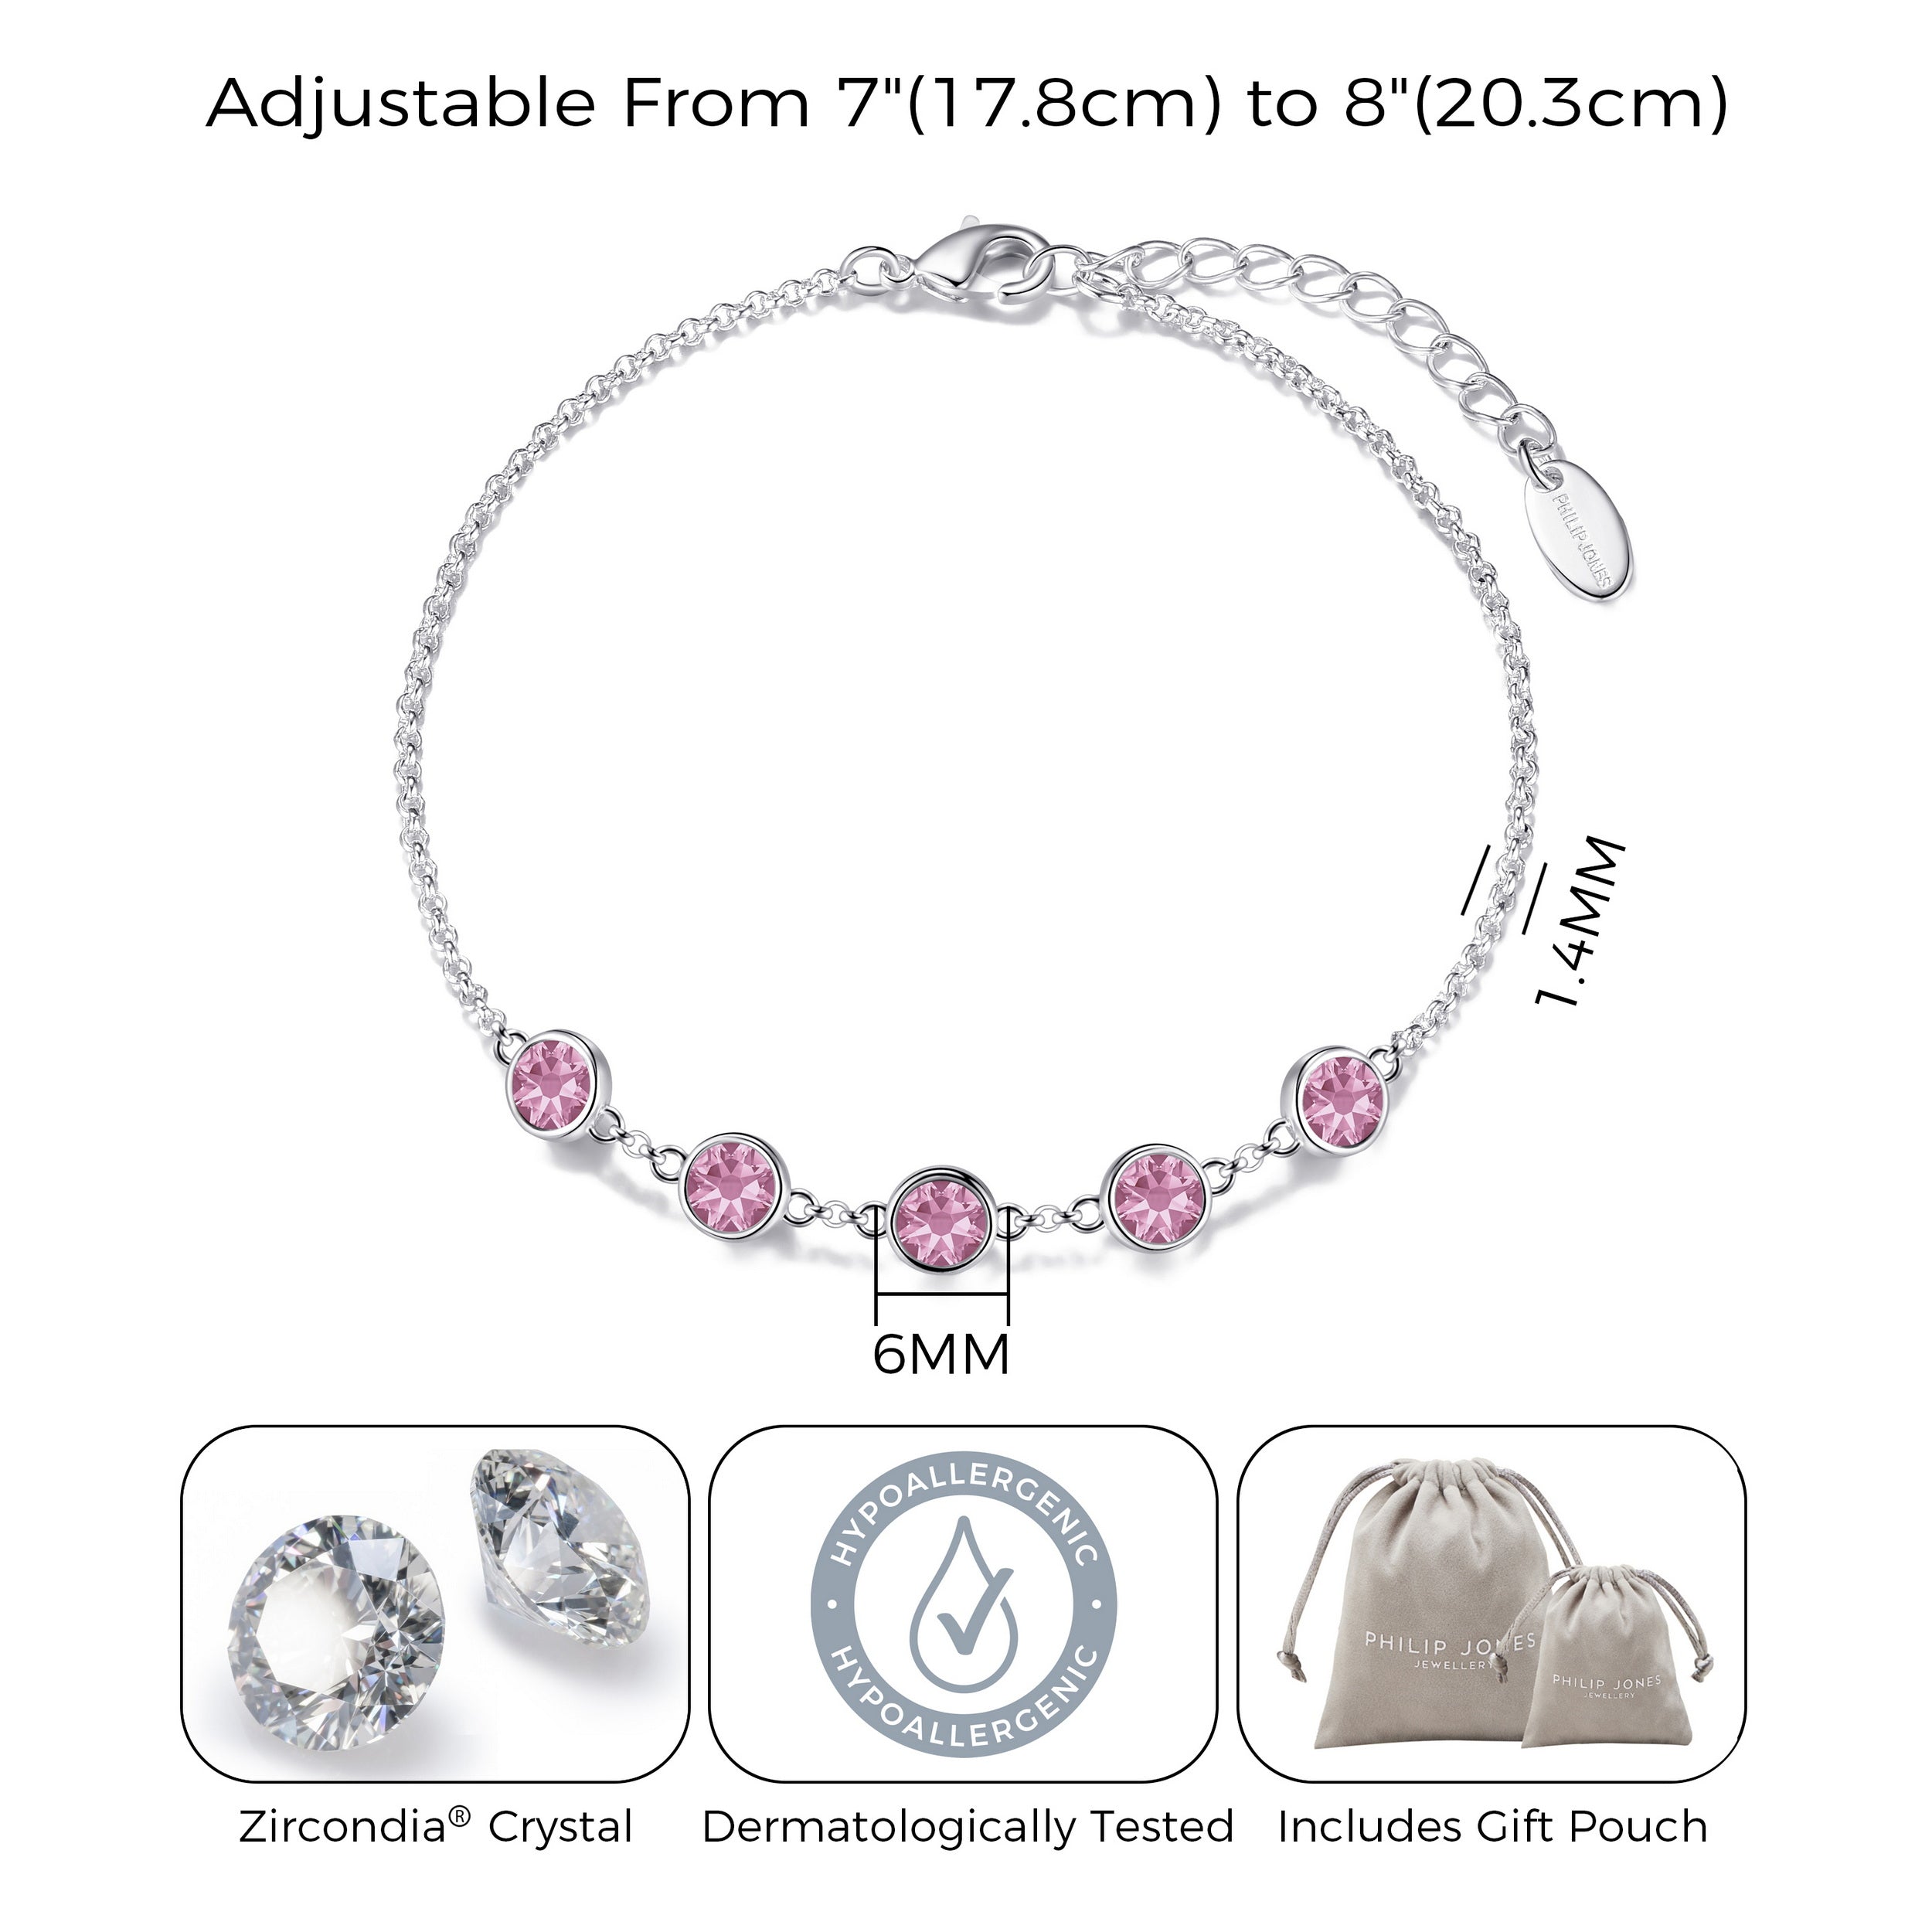 October Birthstone Bracelet Created with Tourmaline Zircondia® Crystals